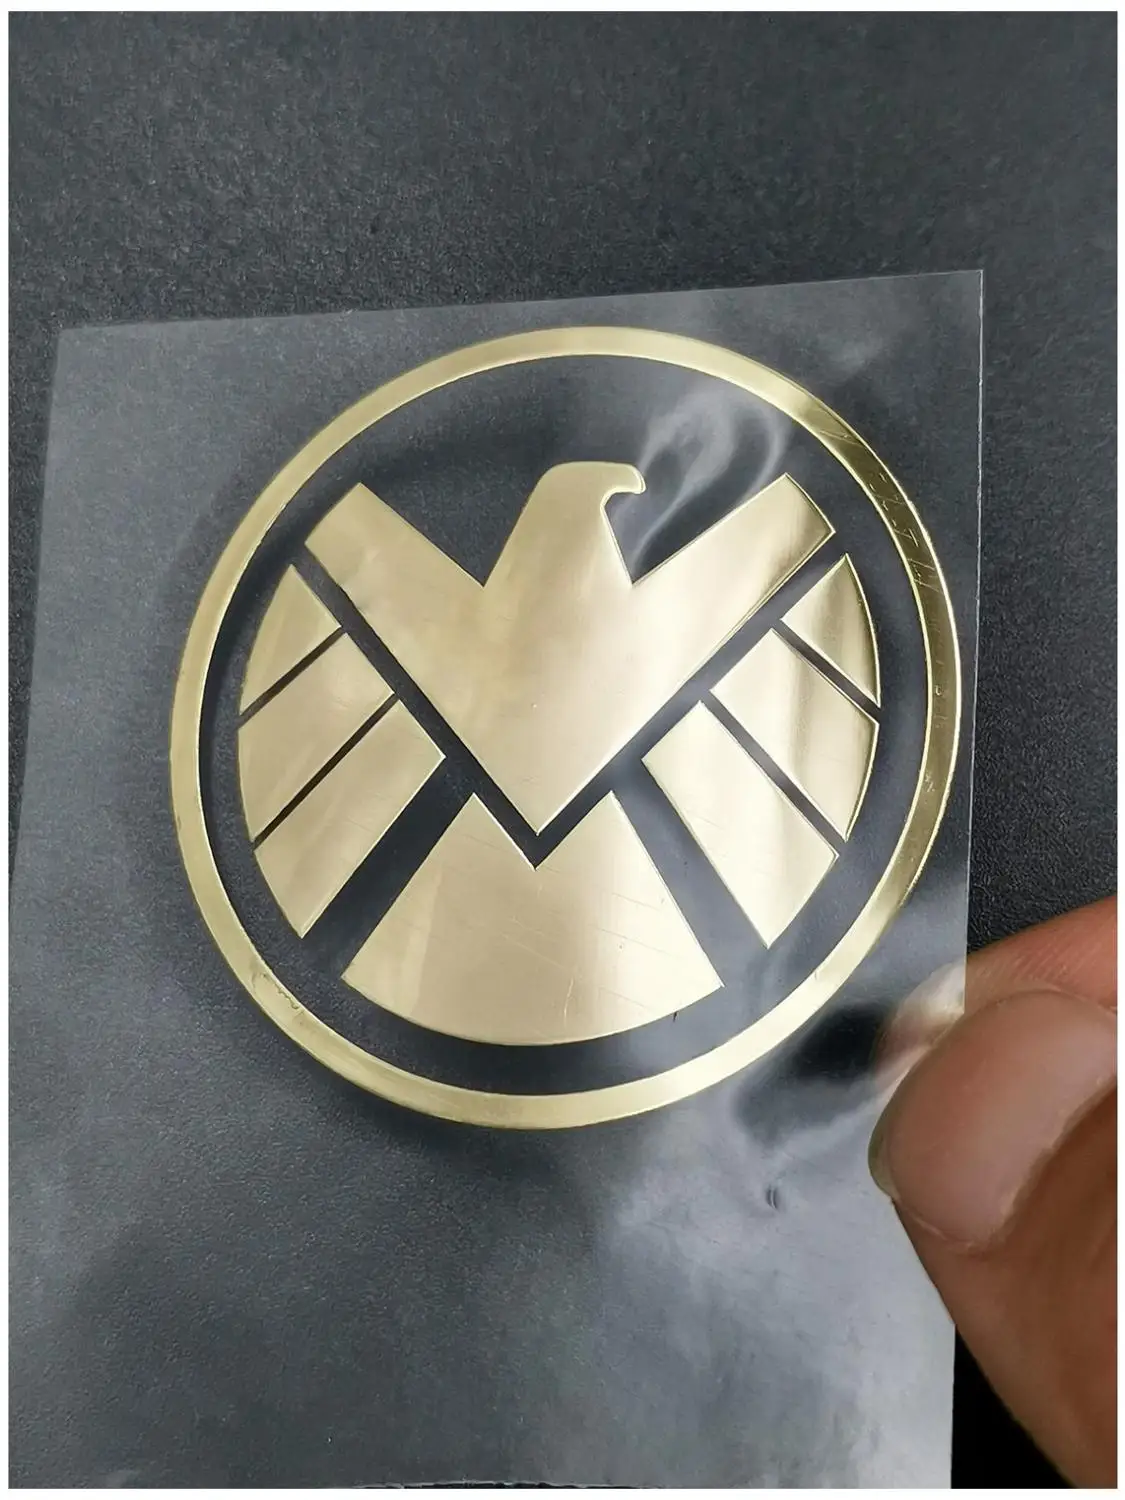 Avengers Marvel Agents of SHIELD Chrome Metal Car Sticker Badge Emblem Decal e 